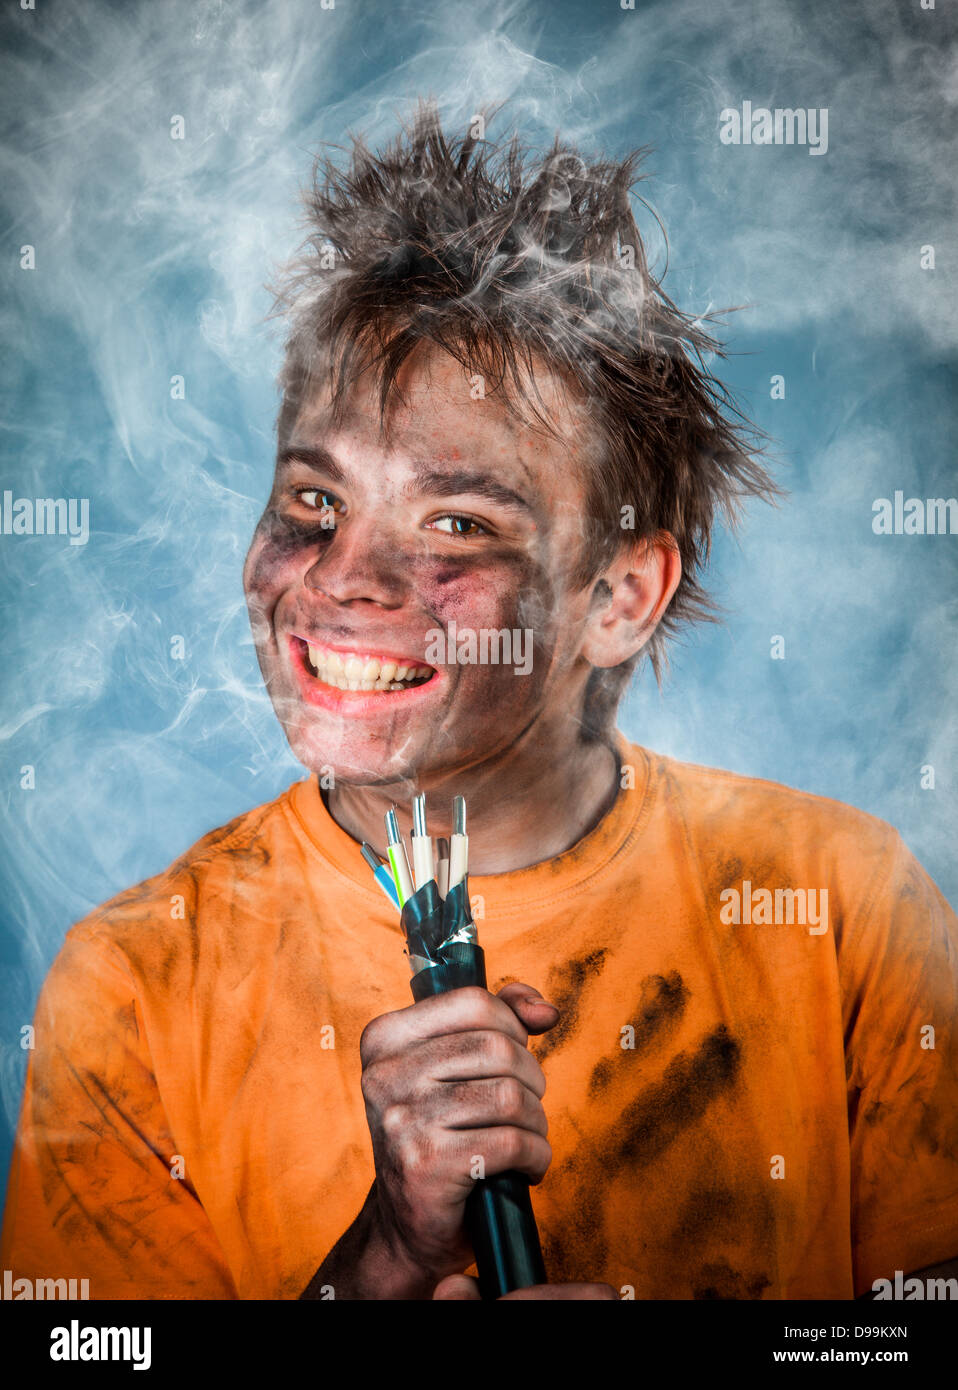 Boy has a electric shock Stock Photo